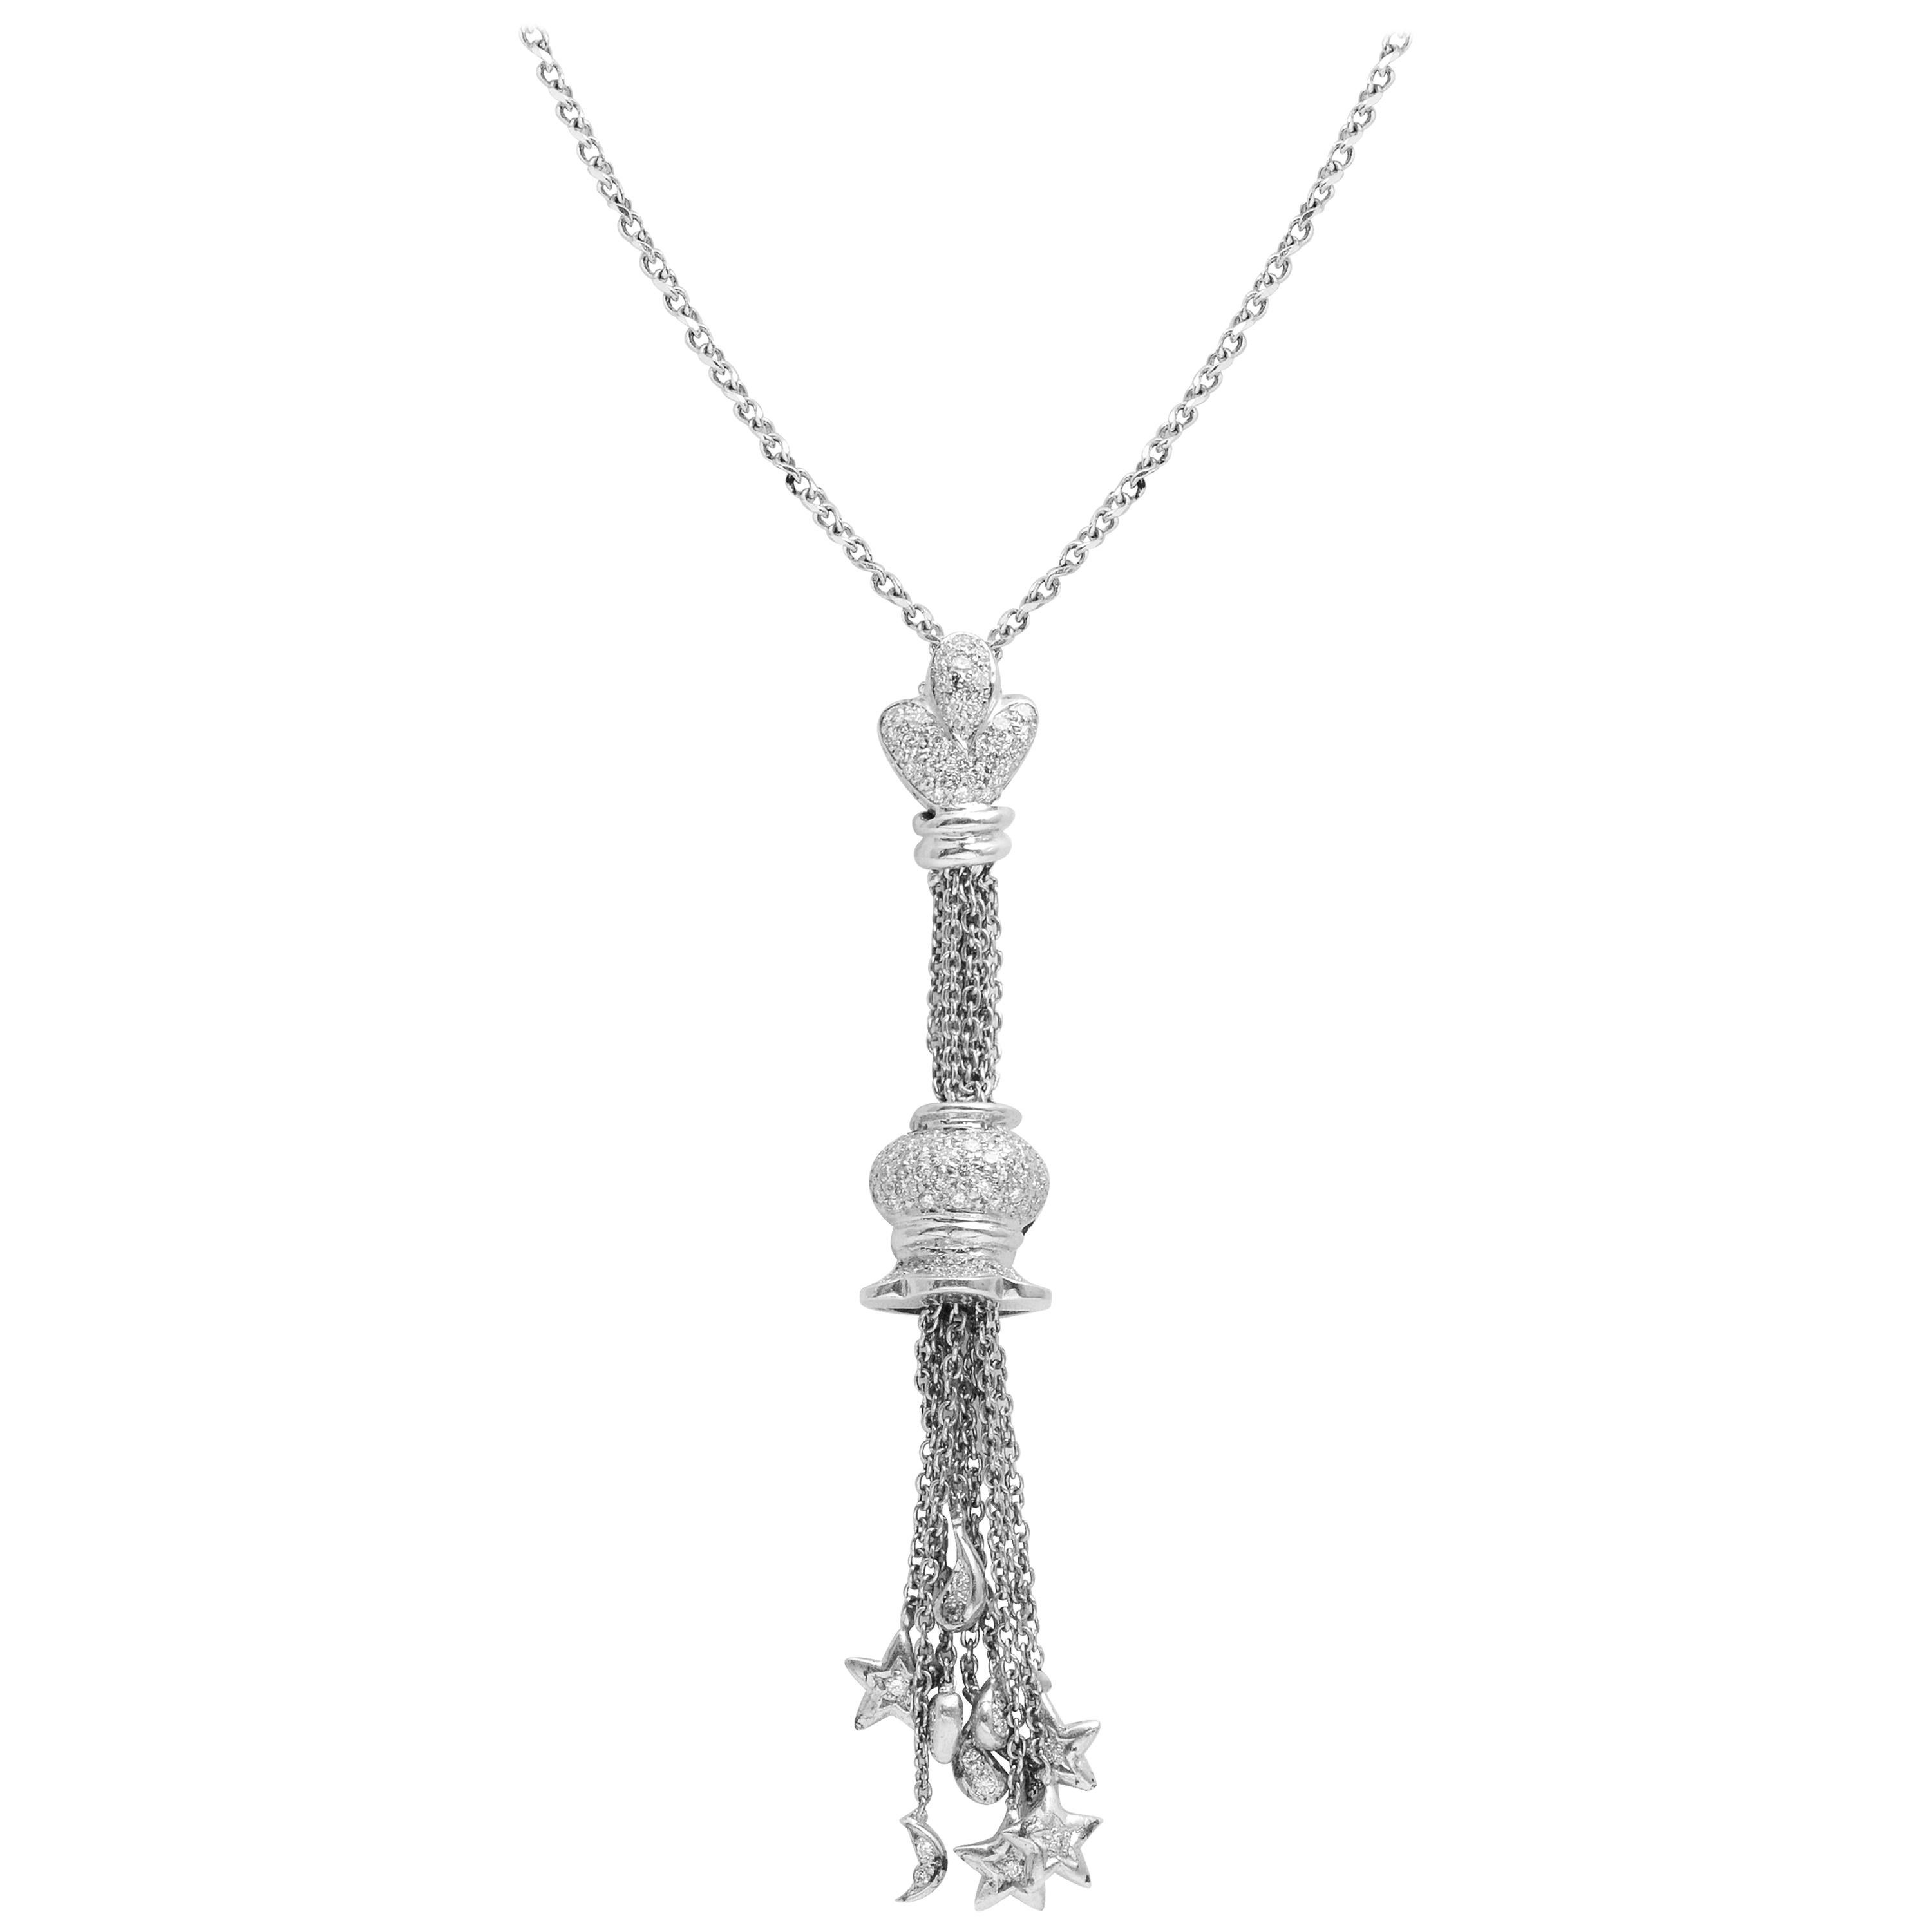 18 Karat White Gold Diamond Pendant with Chain For Sale